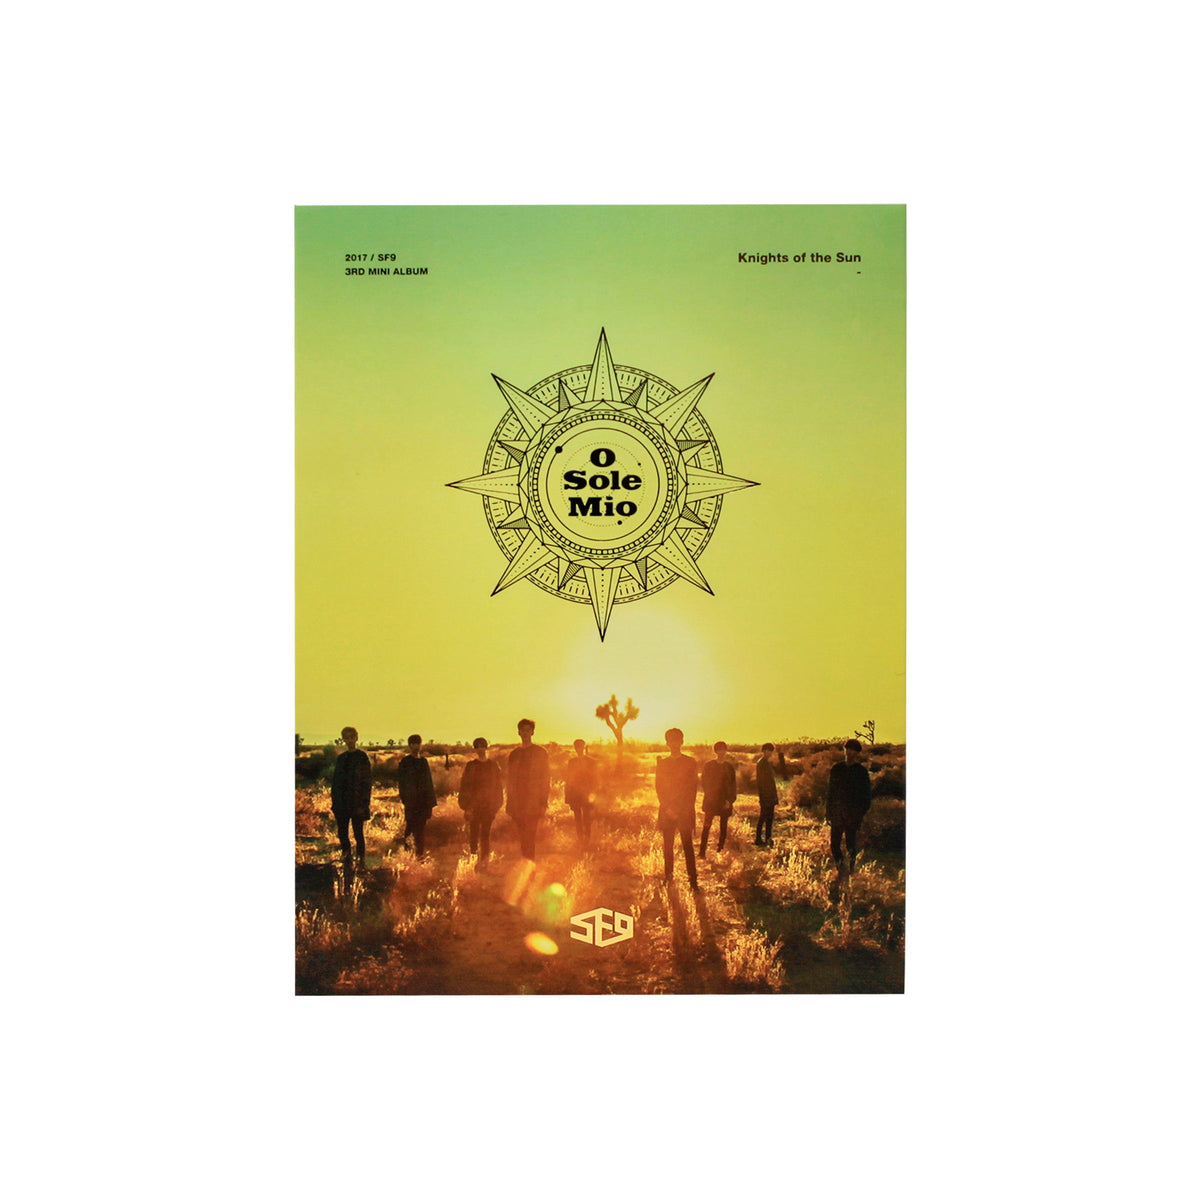 SF9 - Knights of the Sun 3rd Mini Album - main image - image 3